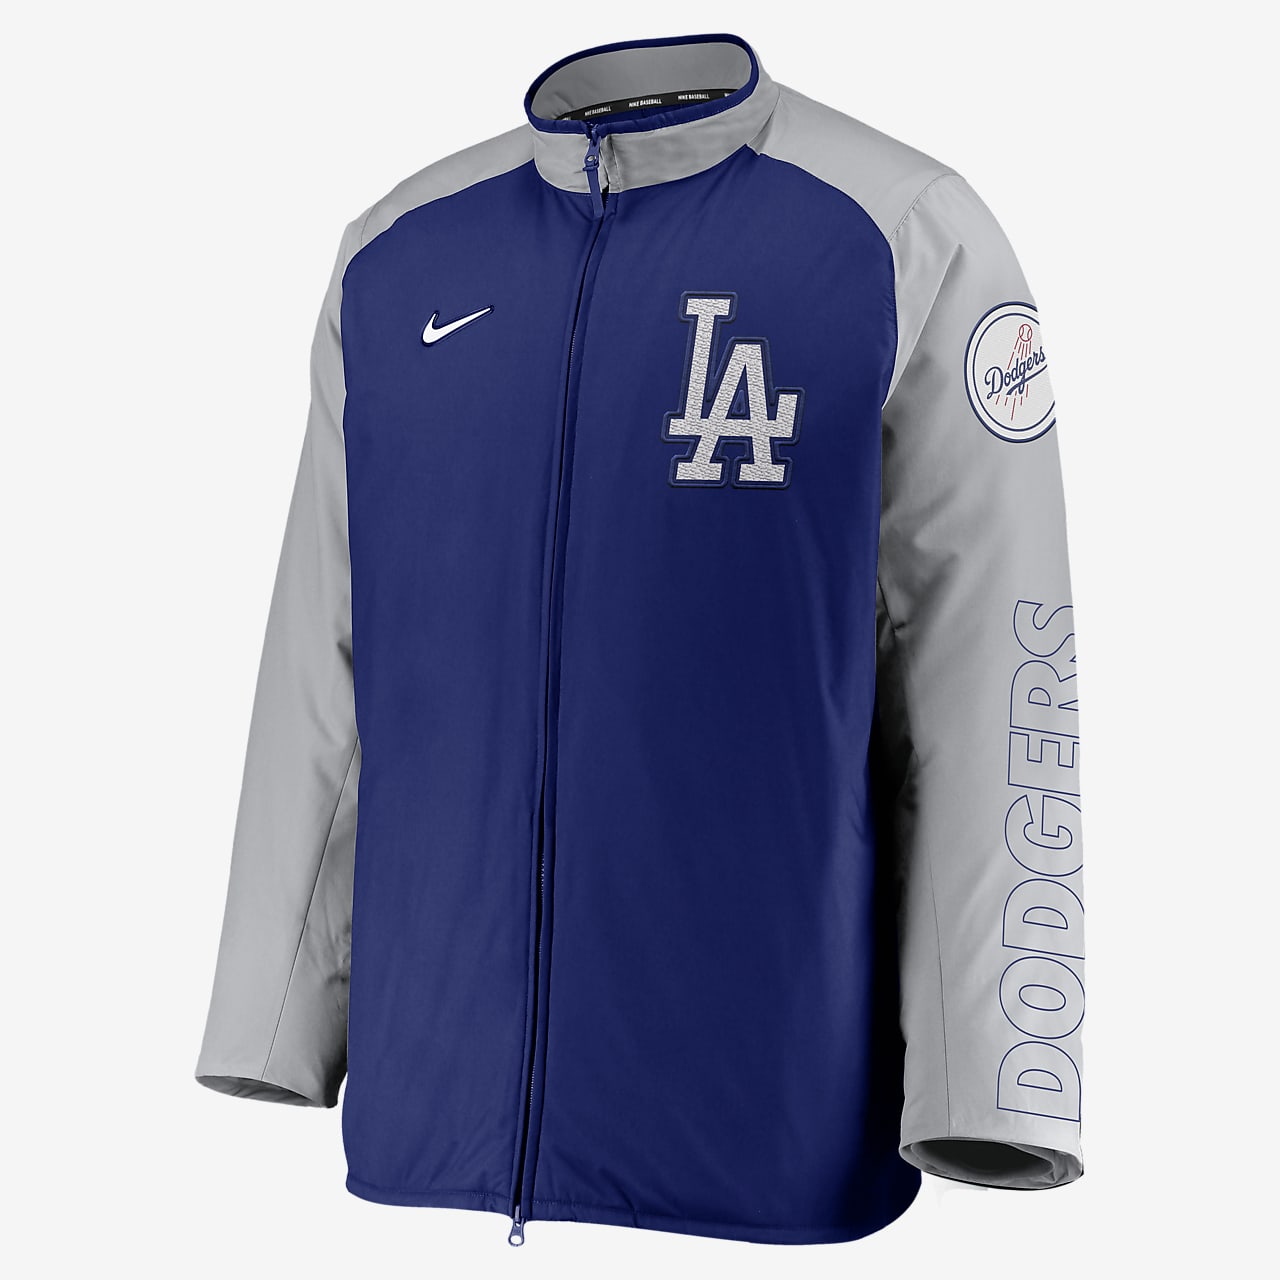 Nike Dugout (MLB Los Angeles Dodgers) Men's Full-Zip Jacket.